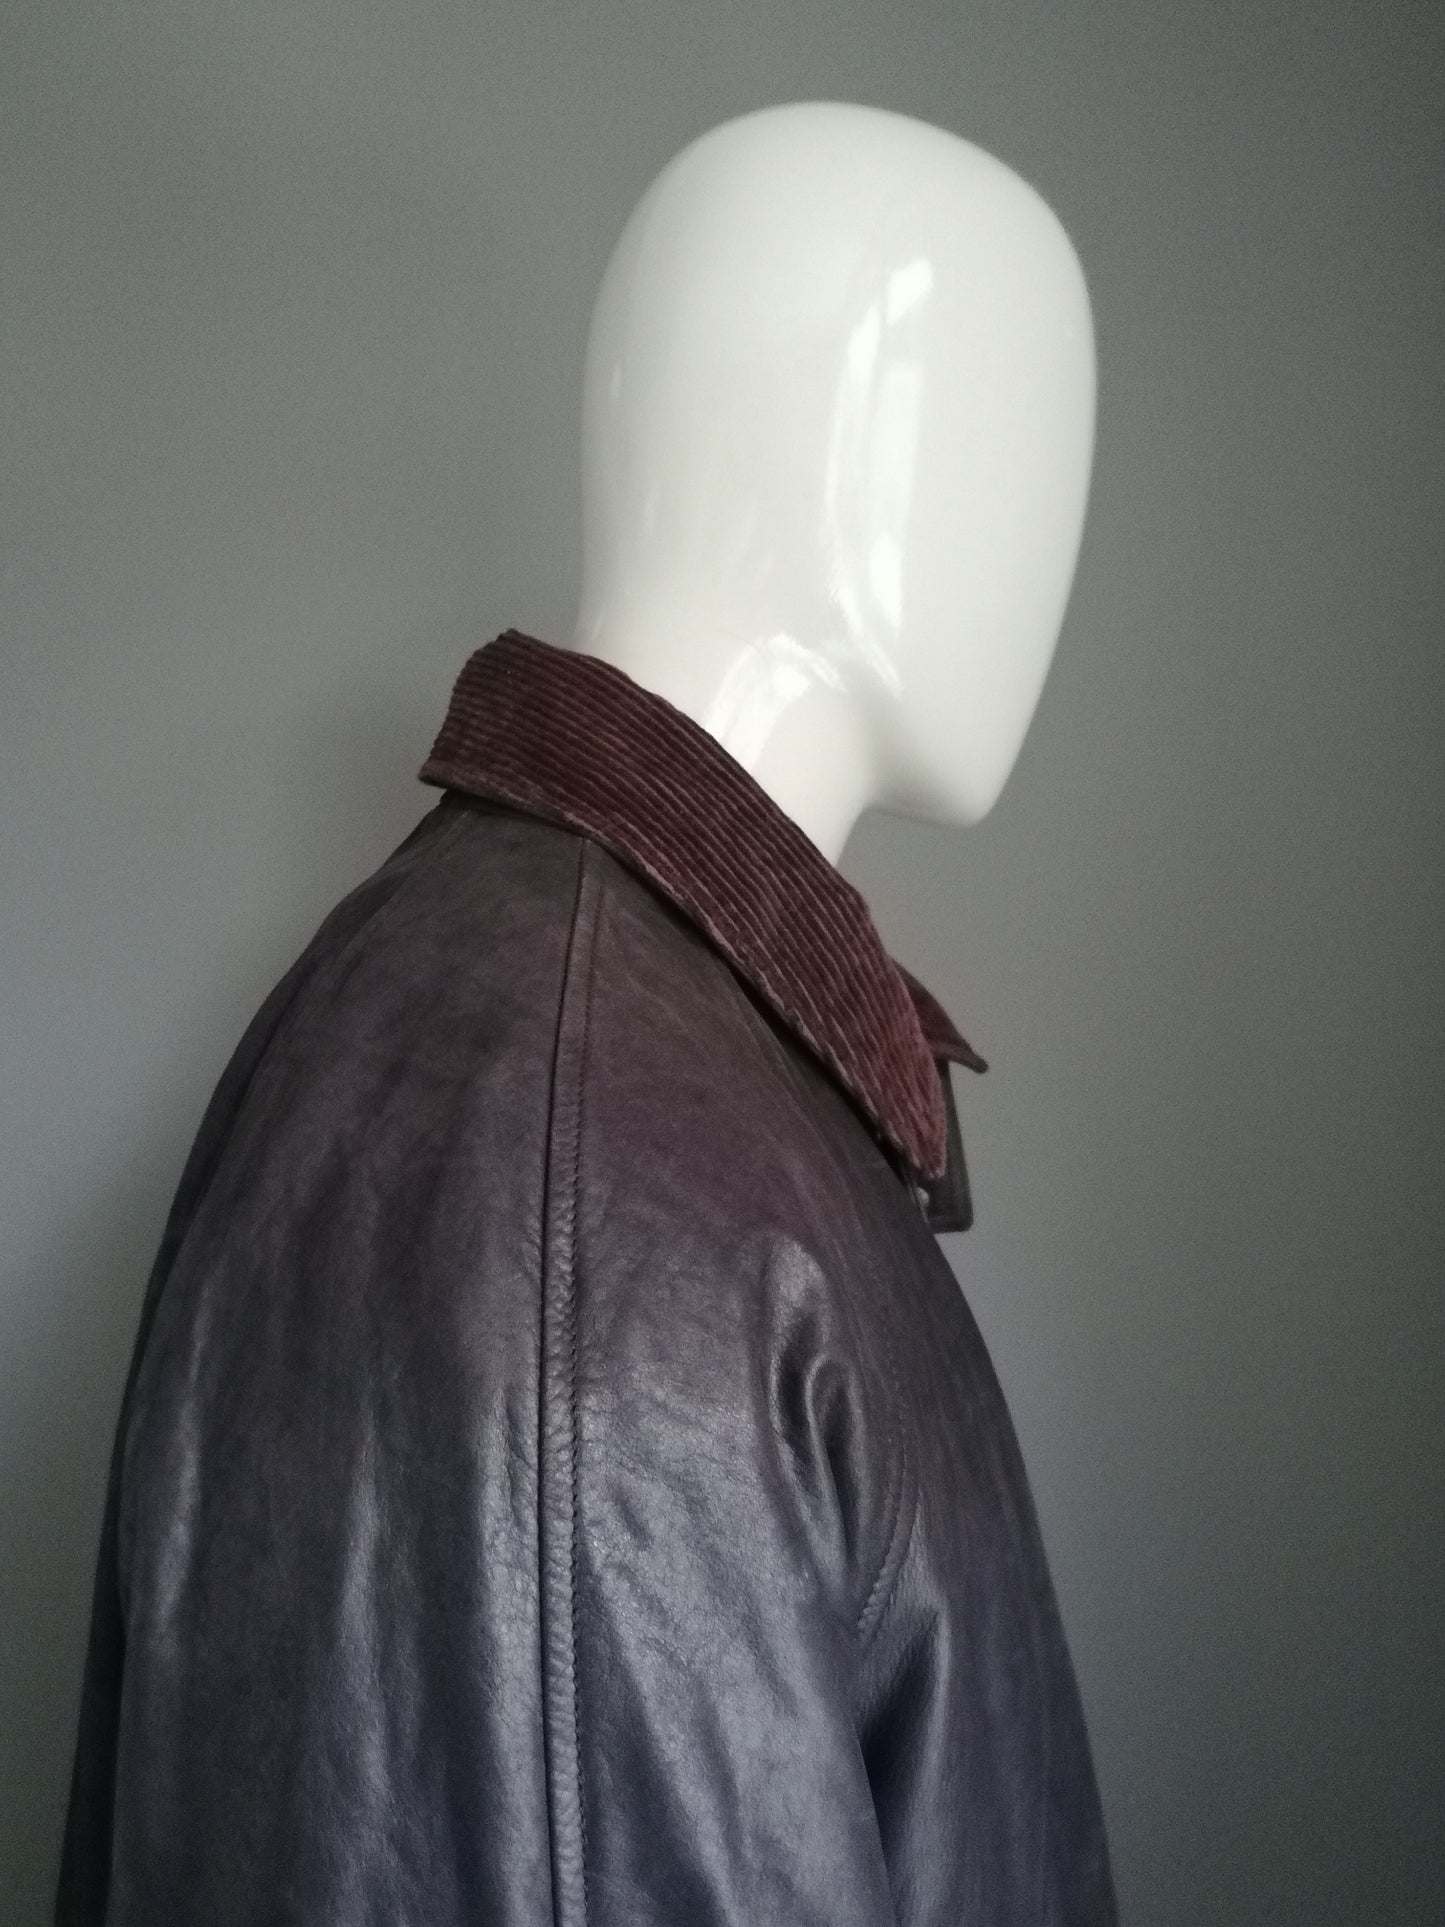 Olly London gevoerde leren half lange jas. Donker Bruin gekleurd met ribkraag en dubbele sluiting. Maat XXL / 2XL.